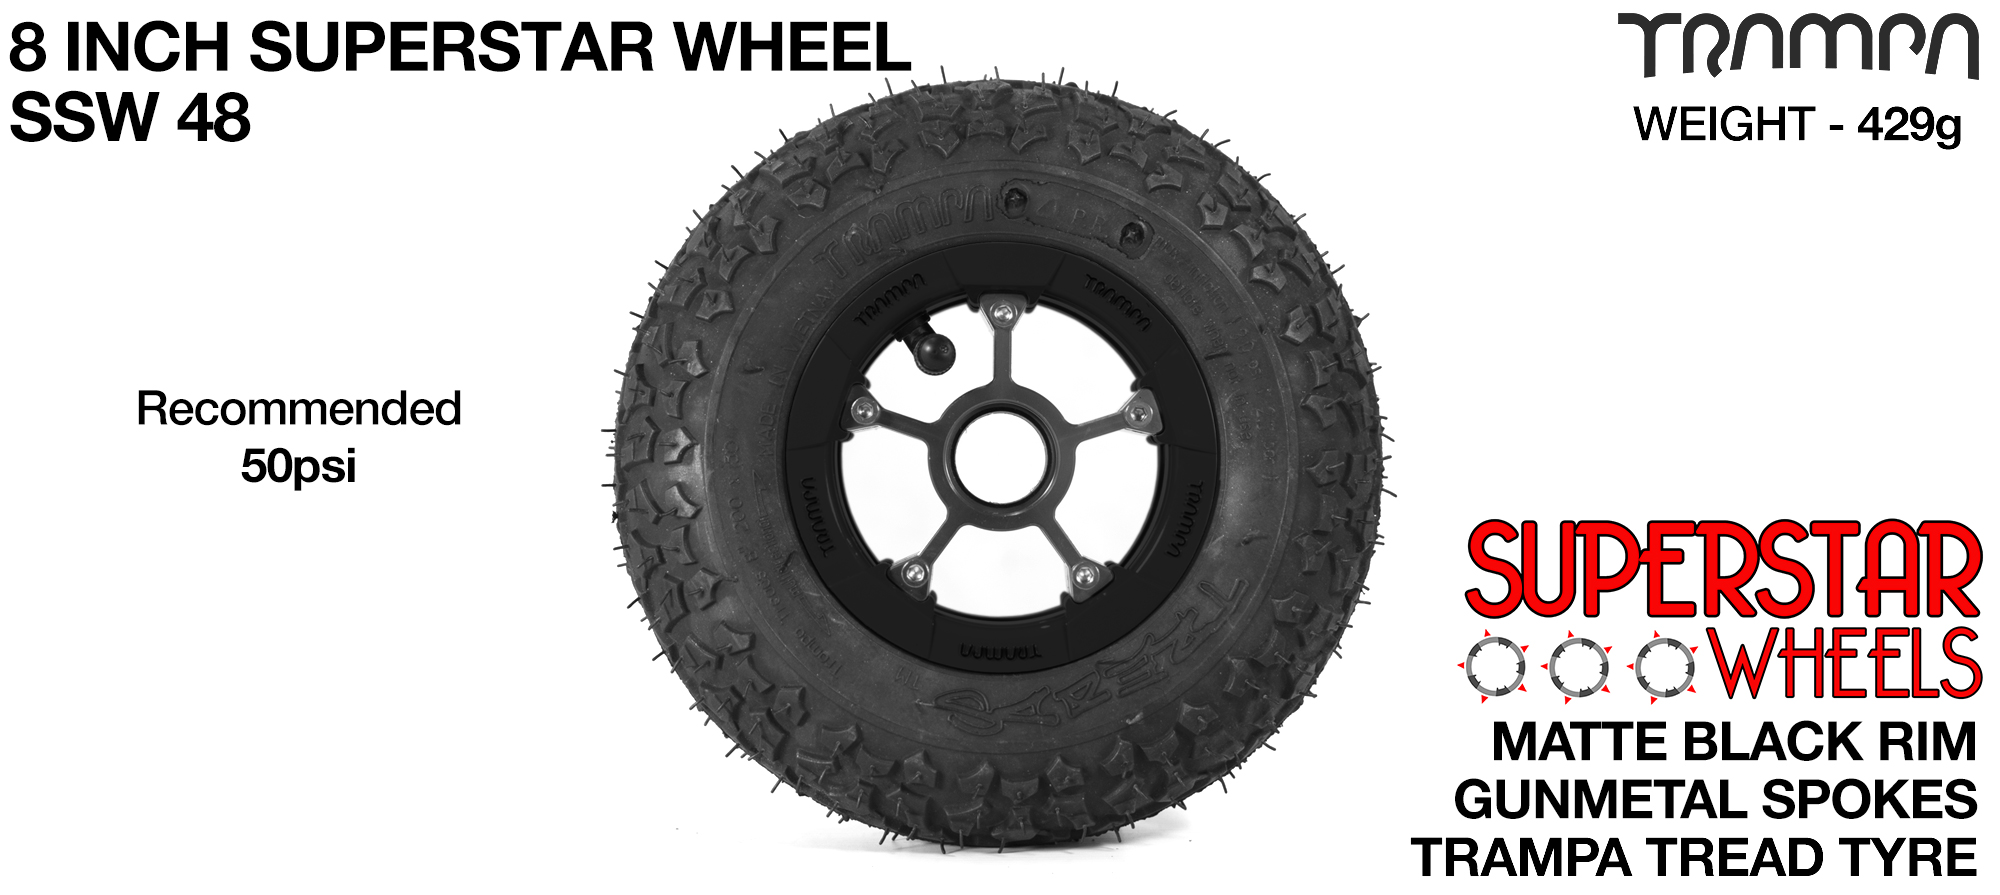 Superstar 8 inch wheel - Matt Black Rim with Gunmetal Anodised spokes & TRAMPA TREAD 8 Inch Tyres